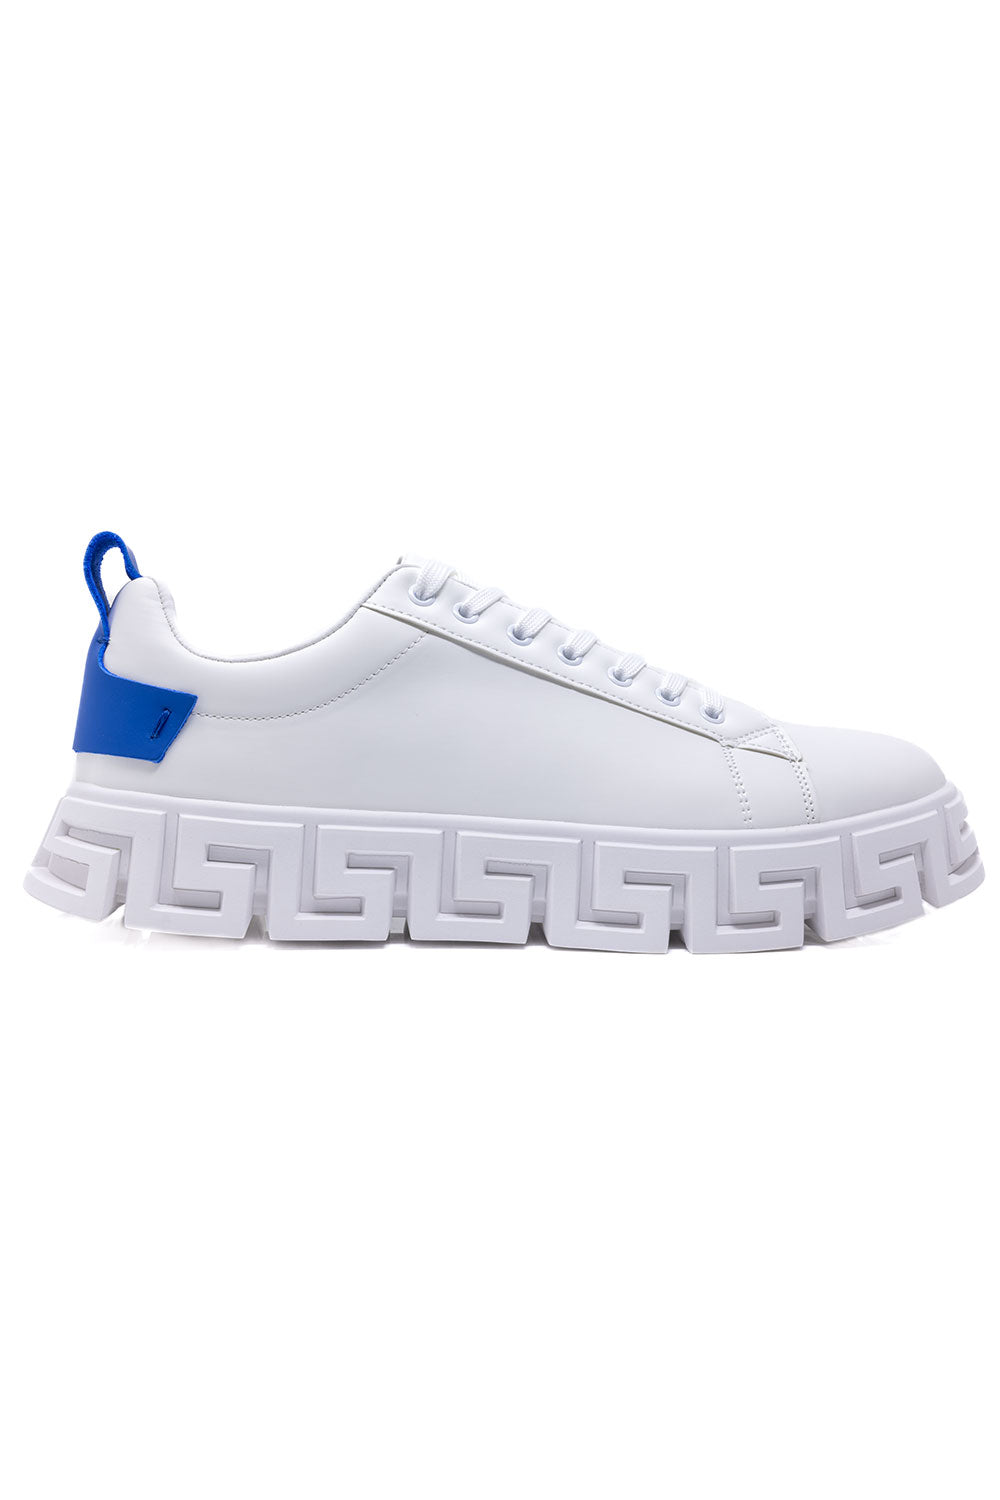 Barabas Men's Wholesale  Greek Key Sole Pattern Premium Sneakers 4SK06 White Navy